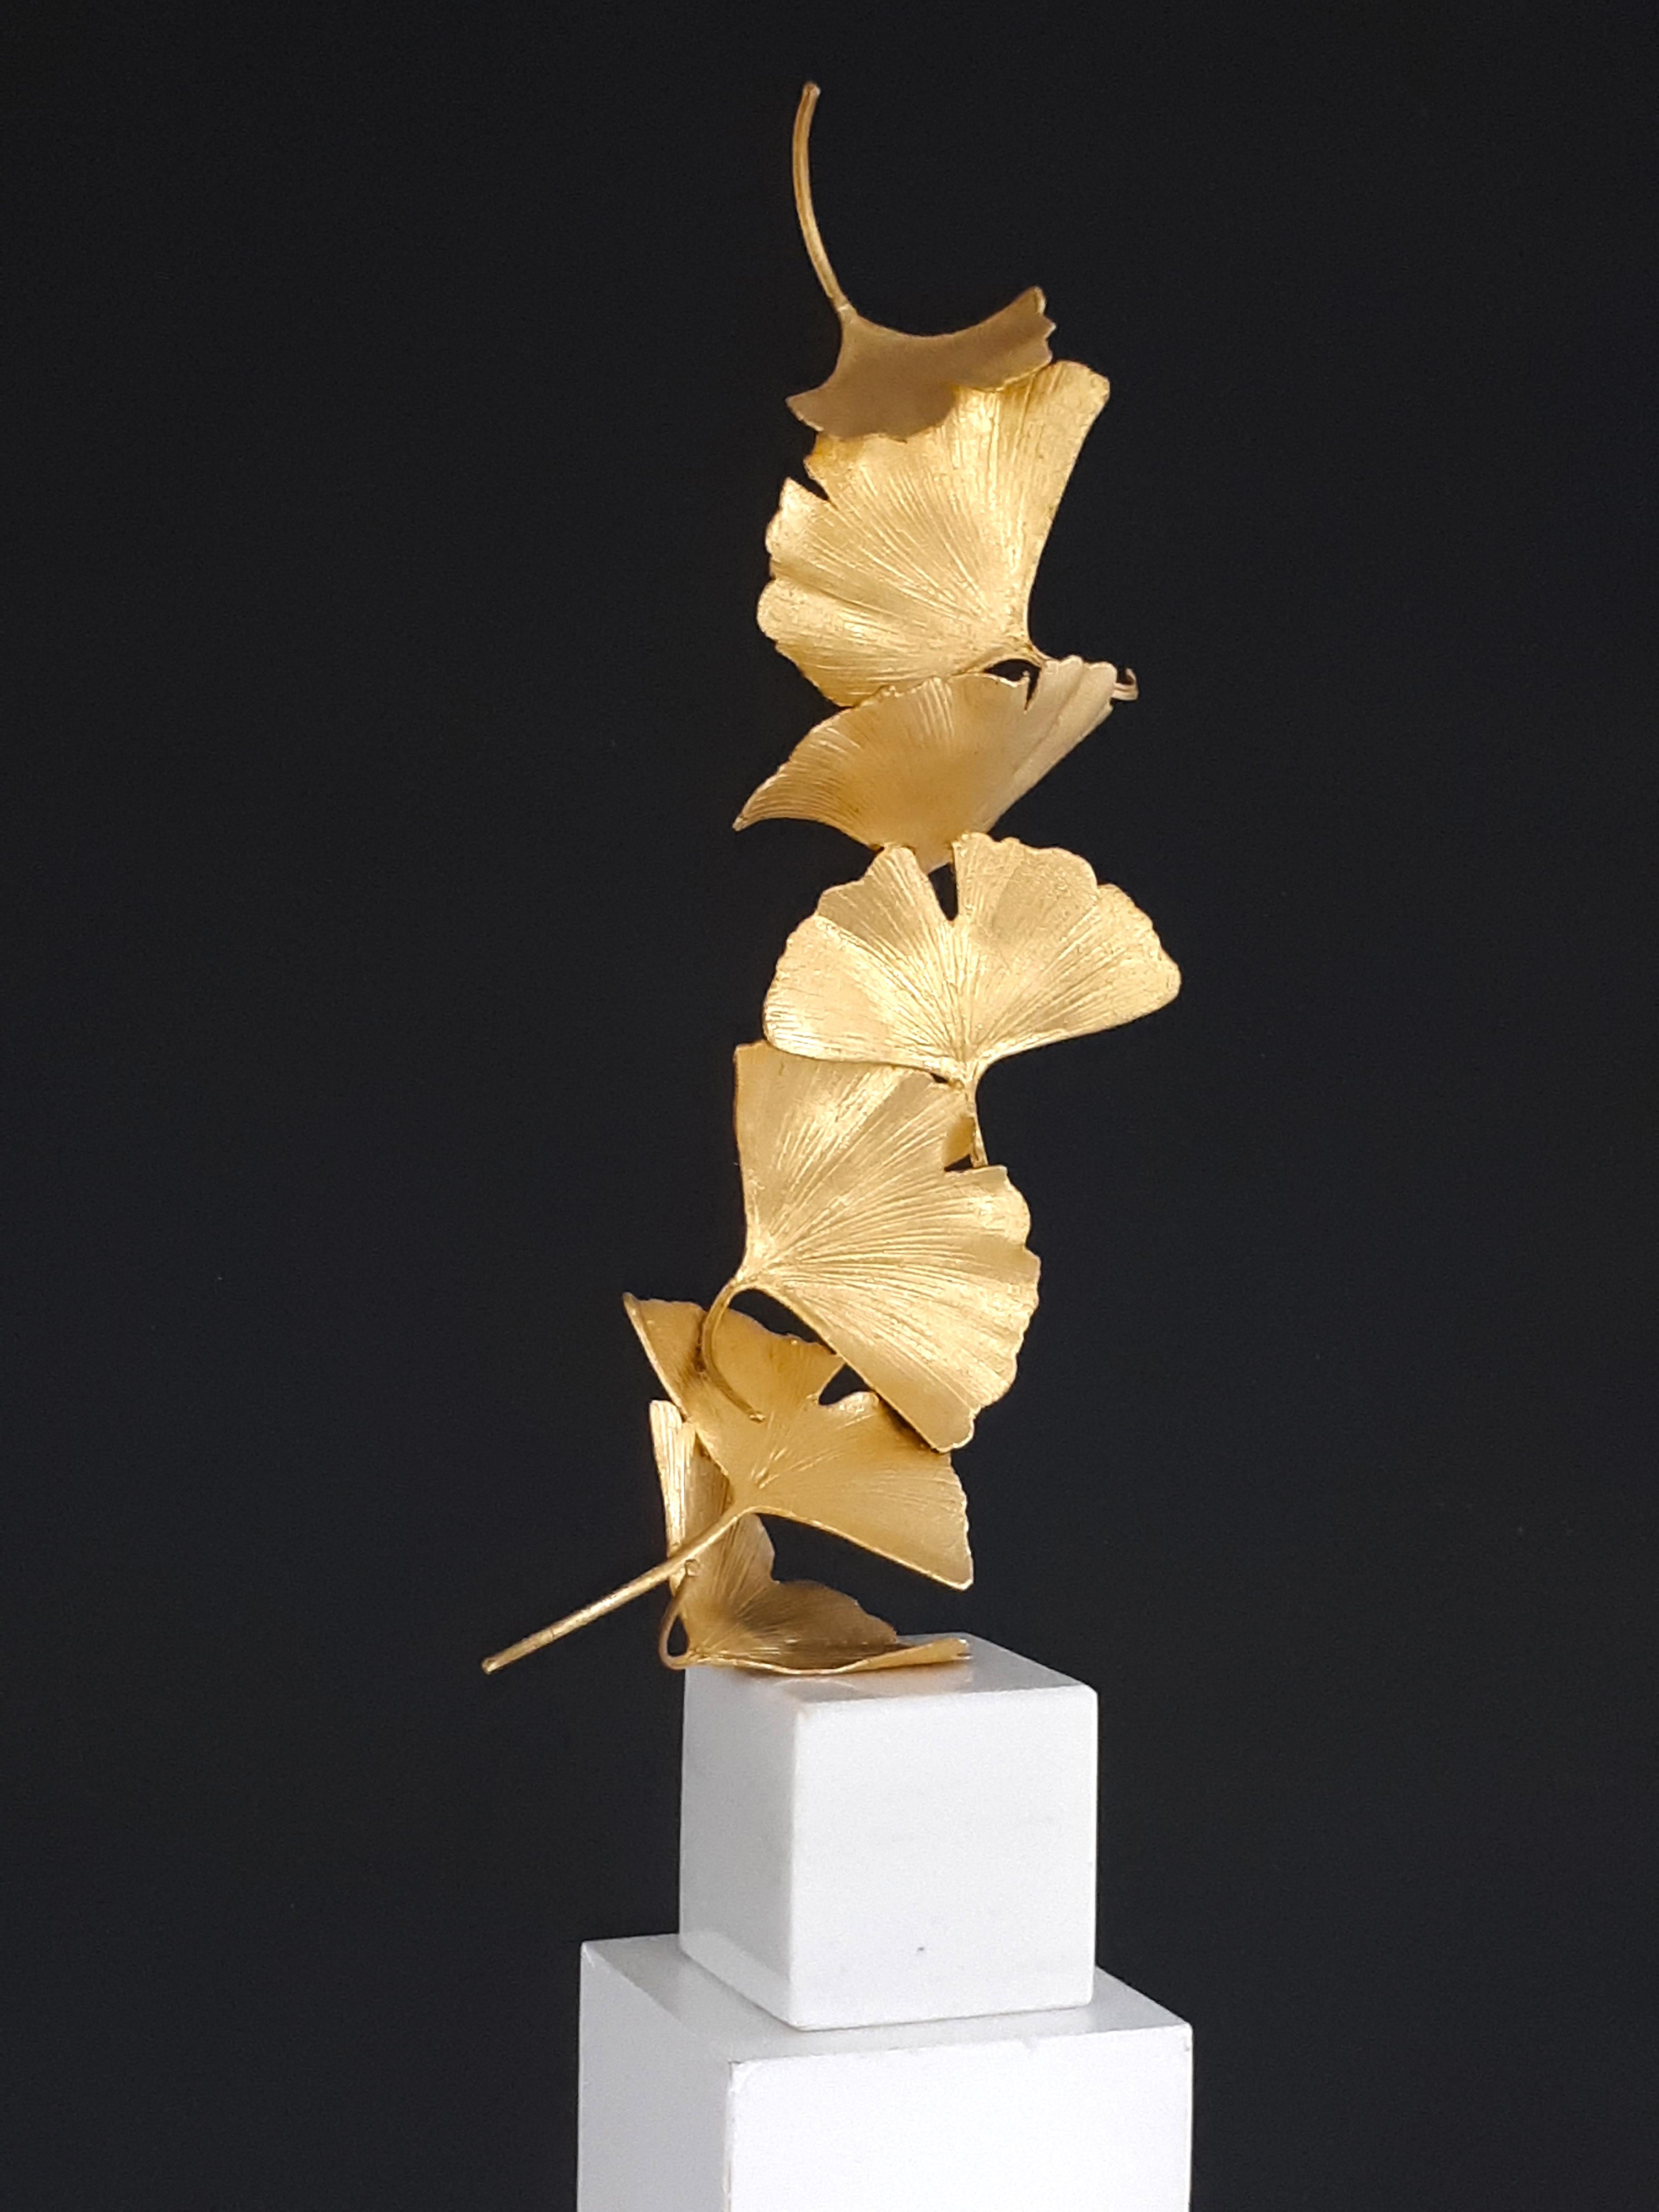 Kuno Vollet Still-Life Sculpture - 6 Golden Gingko Leaves - Cast Brass golden sculpture on white marble base